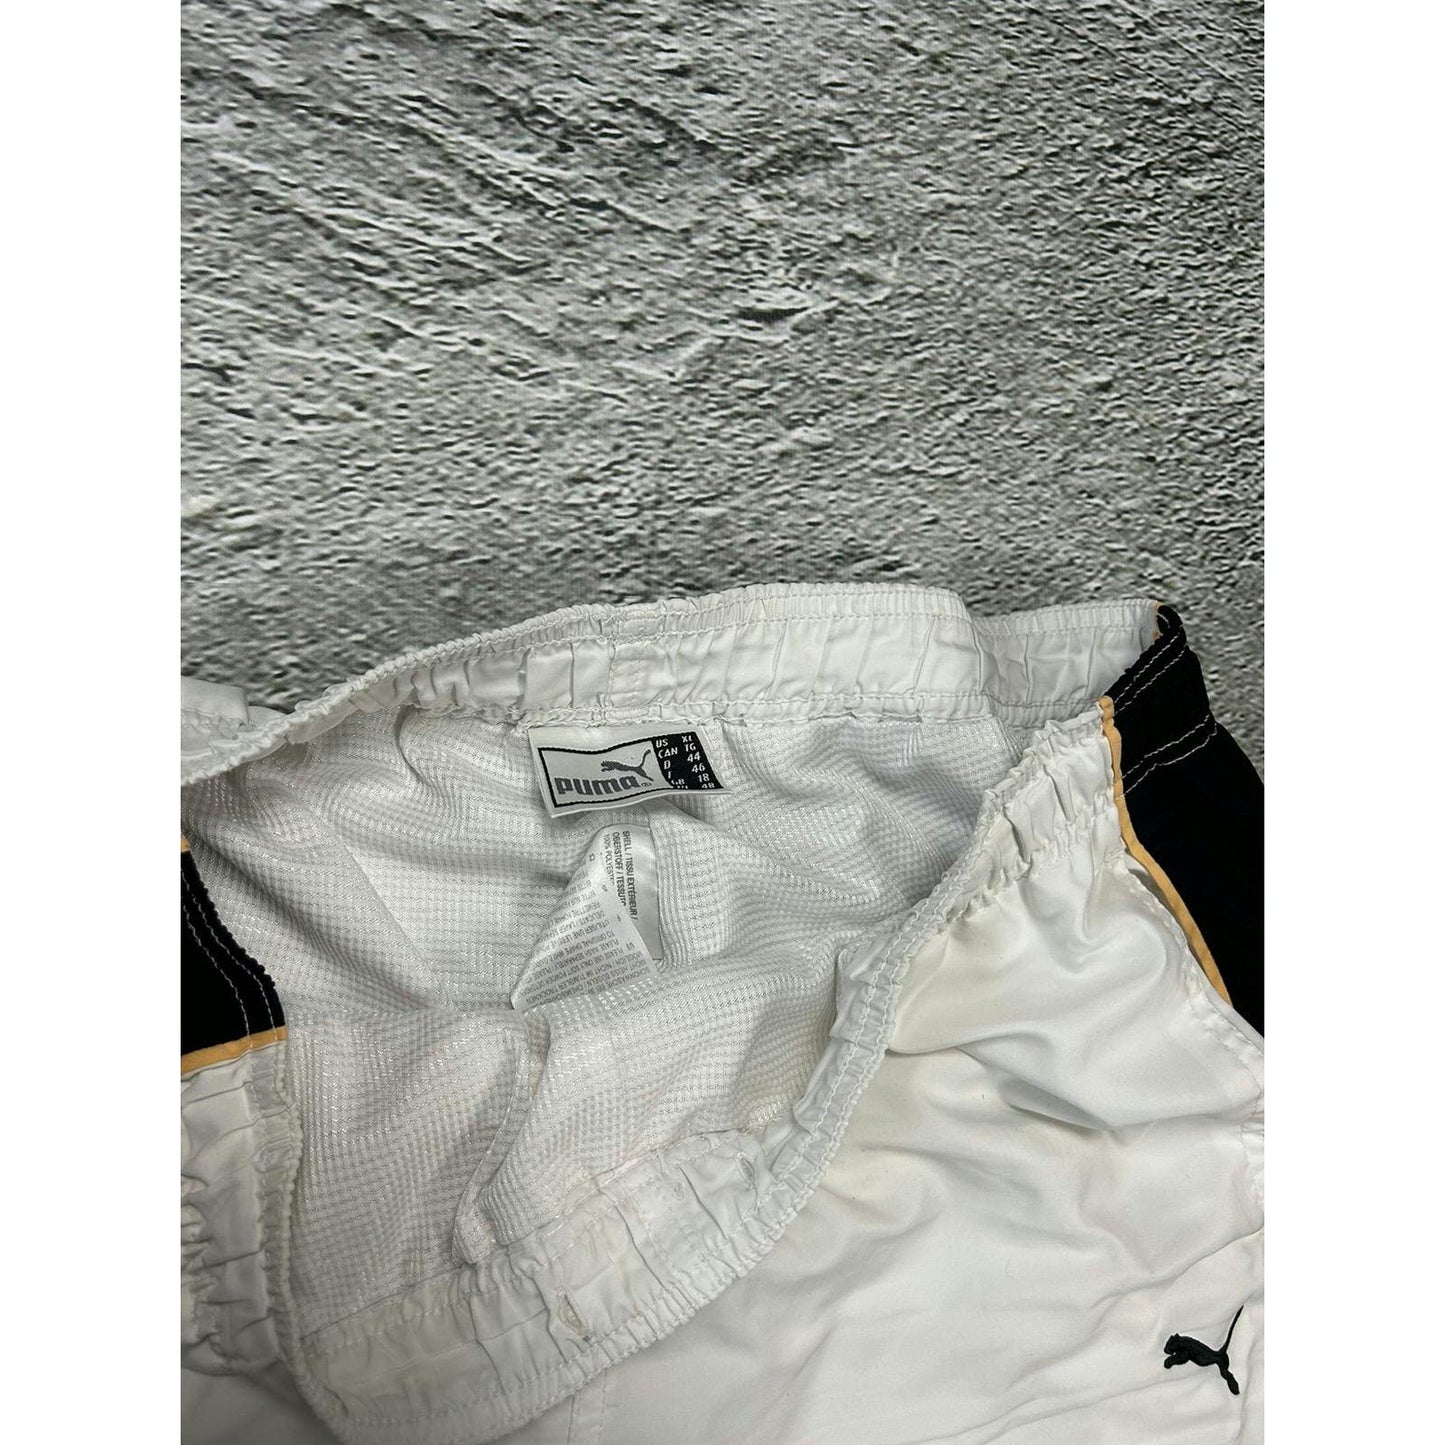 Puma tracksuit pants jacket vintage white Y2K drill